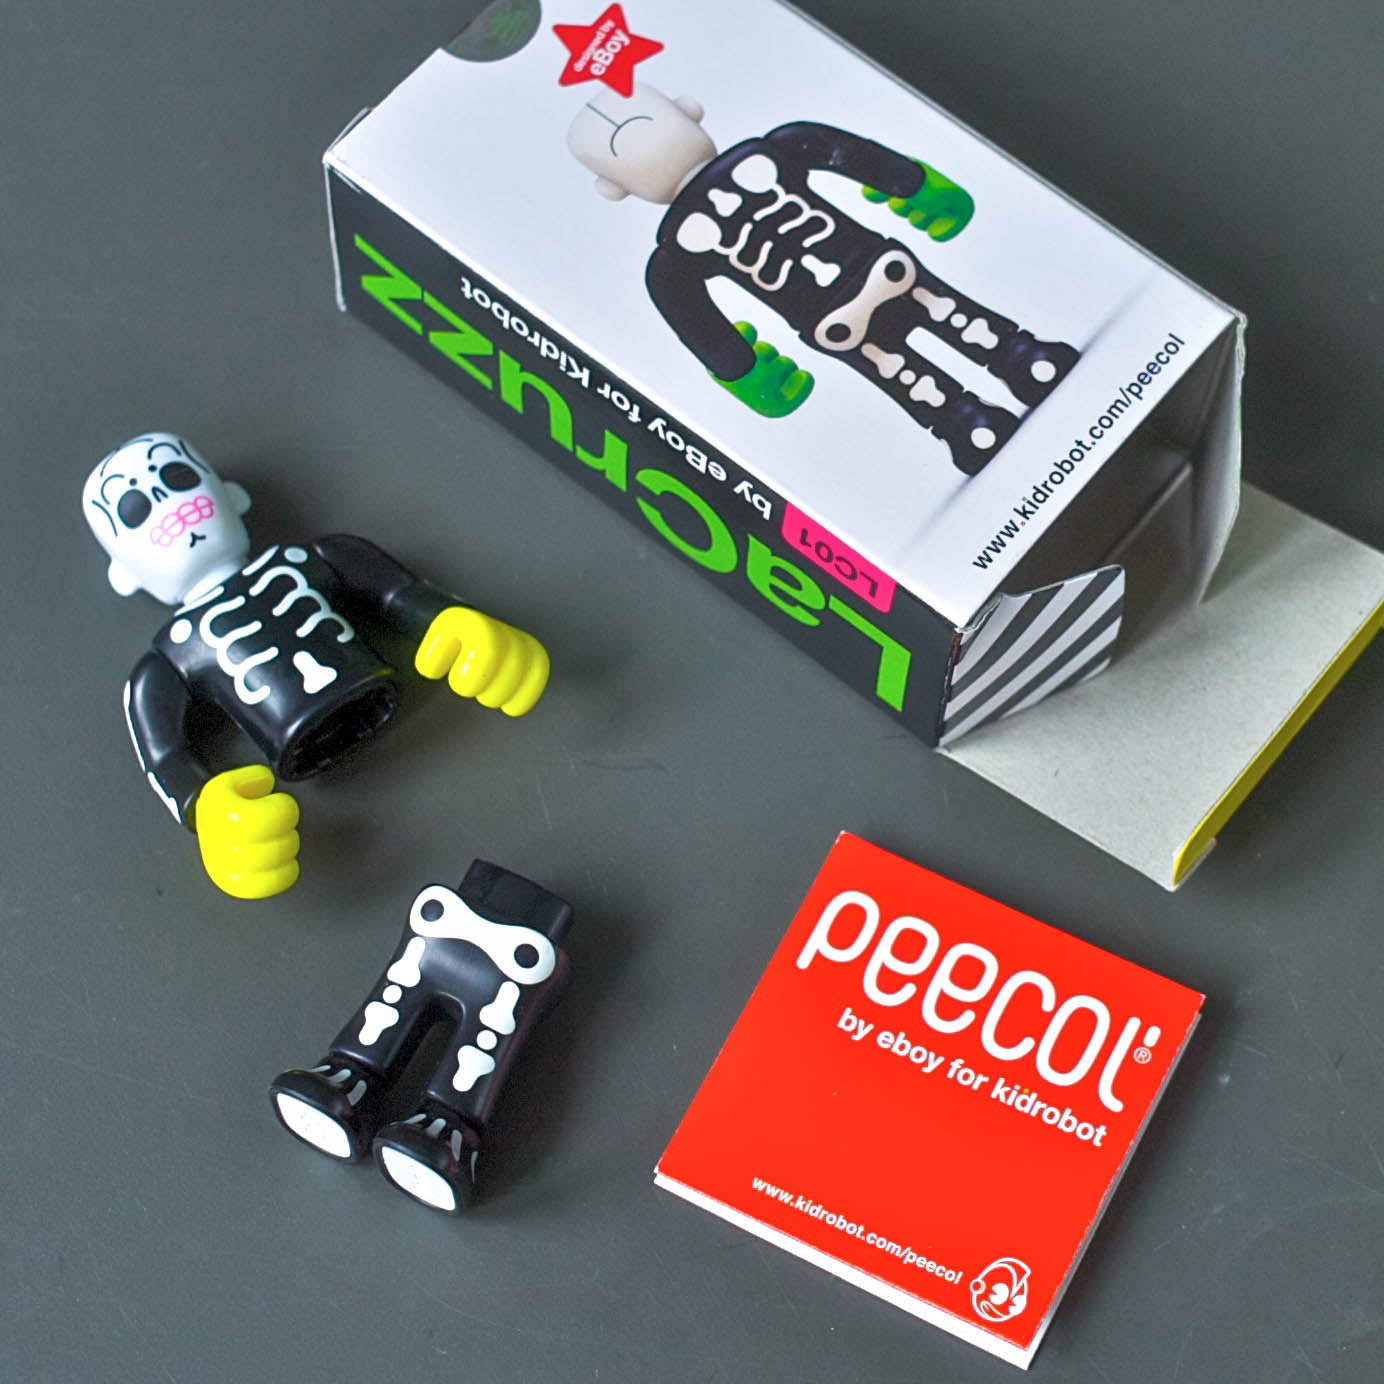 LaCruzz Peecol Toy by eBoy for Kidrobot